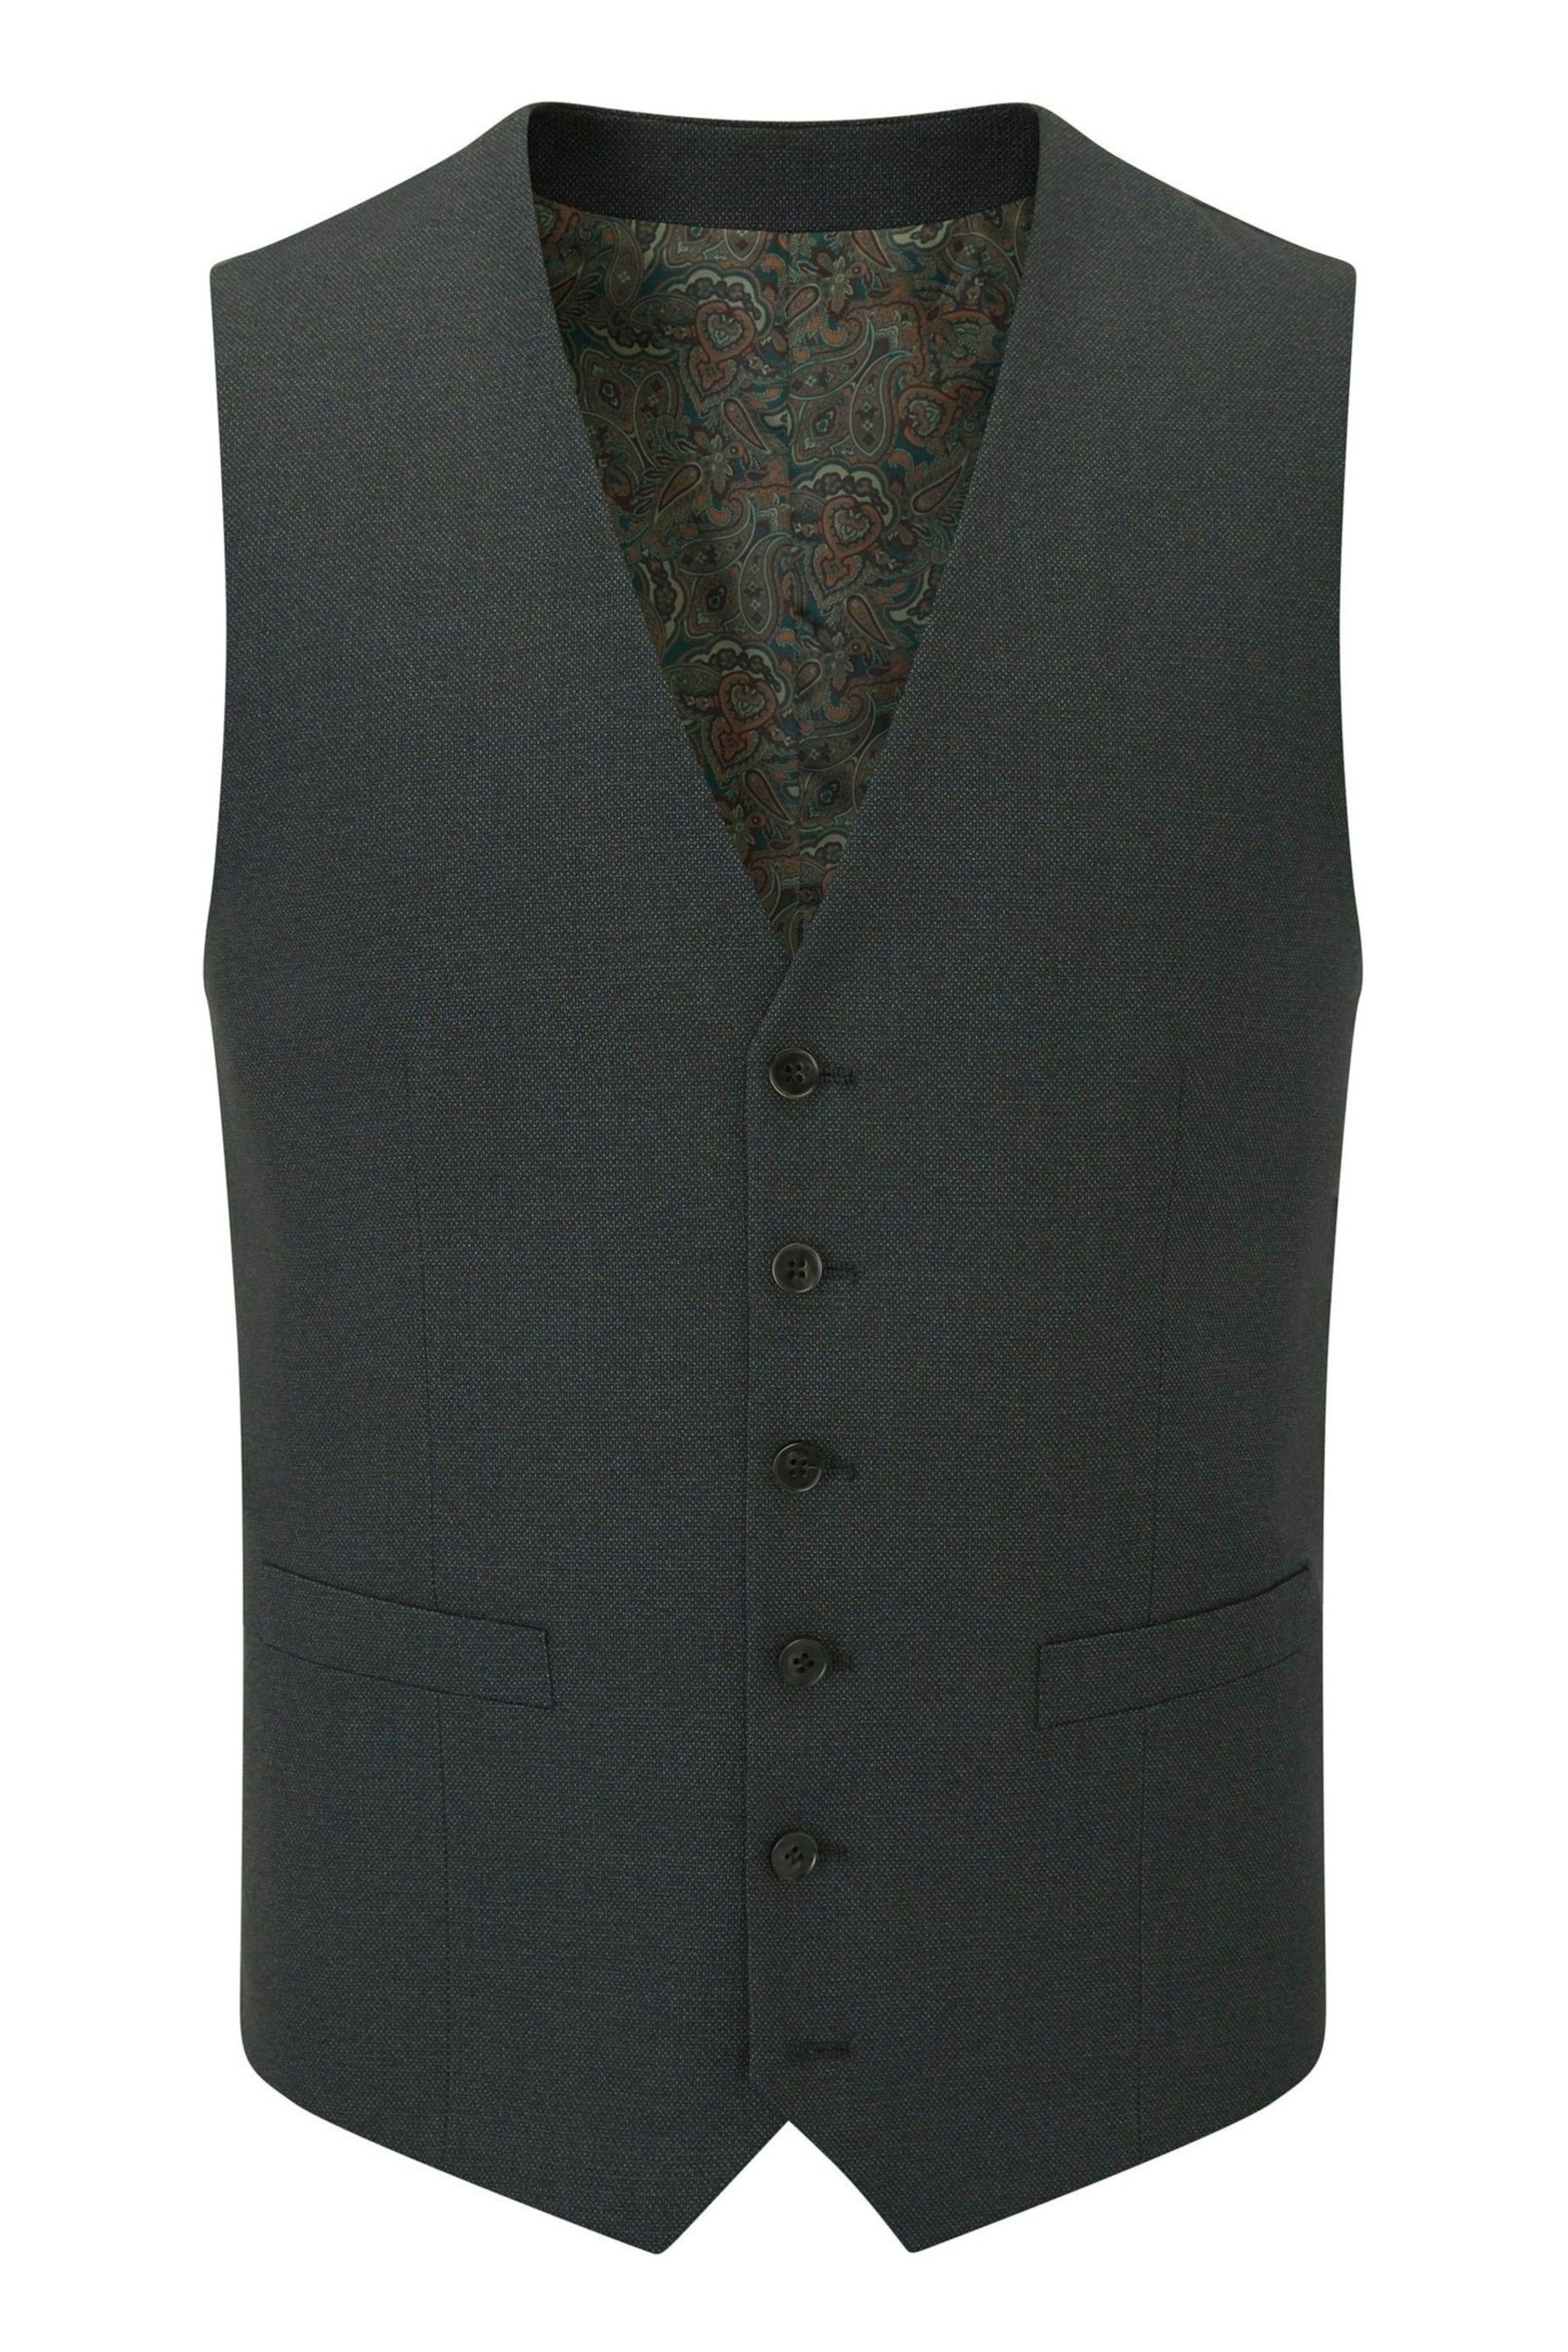 Skopes Harcourt Single Breasted Suit Waistcoat - Image 5 of 6